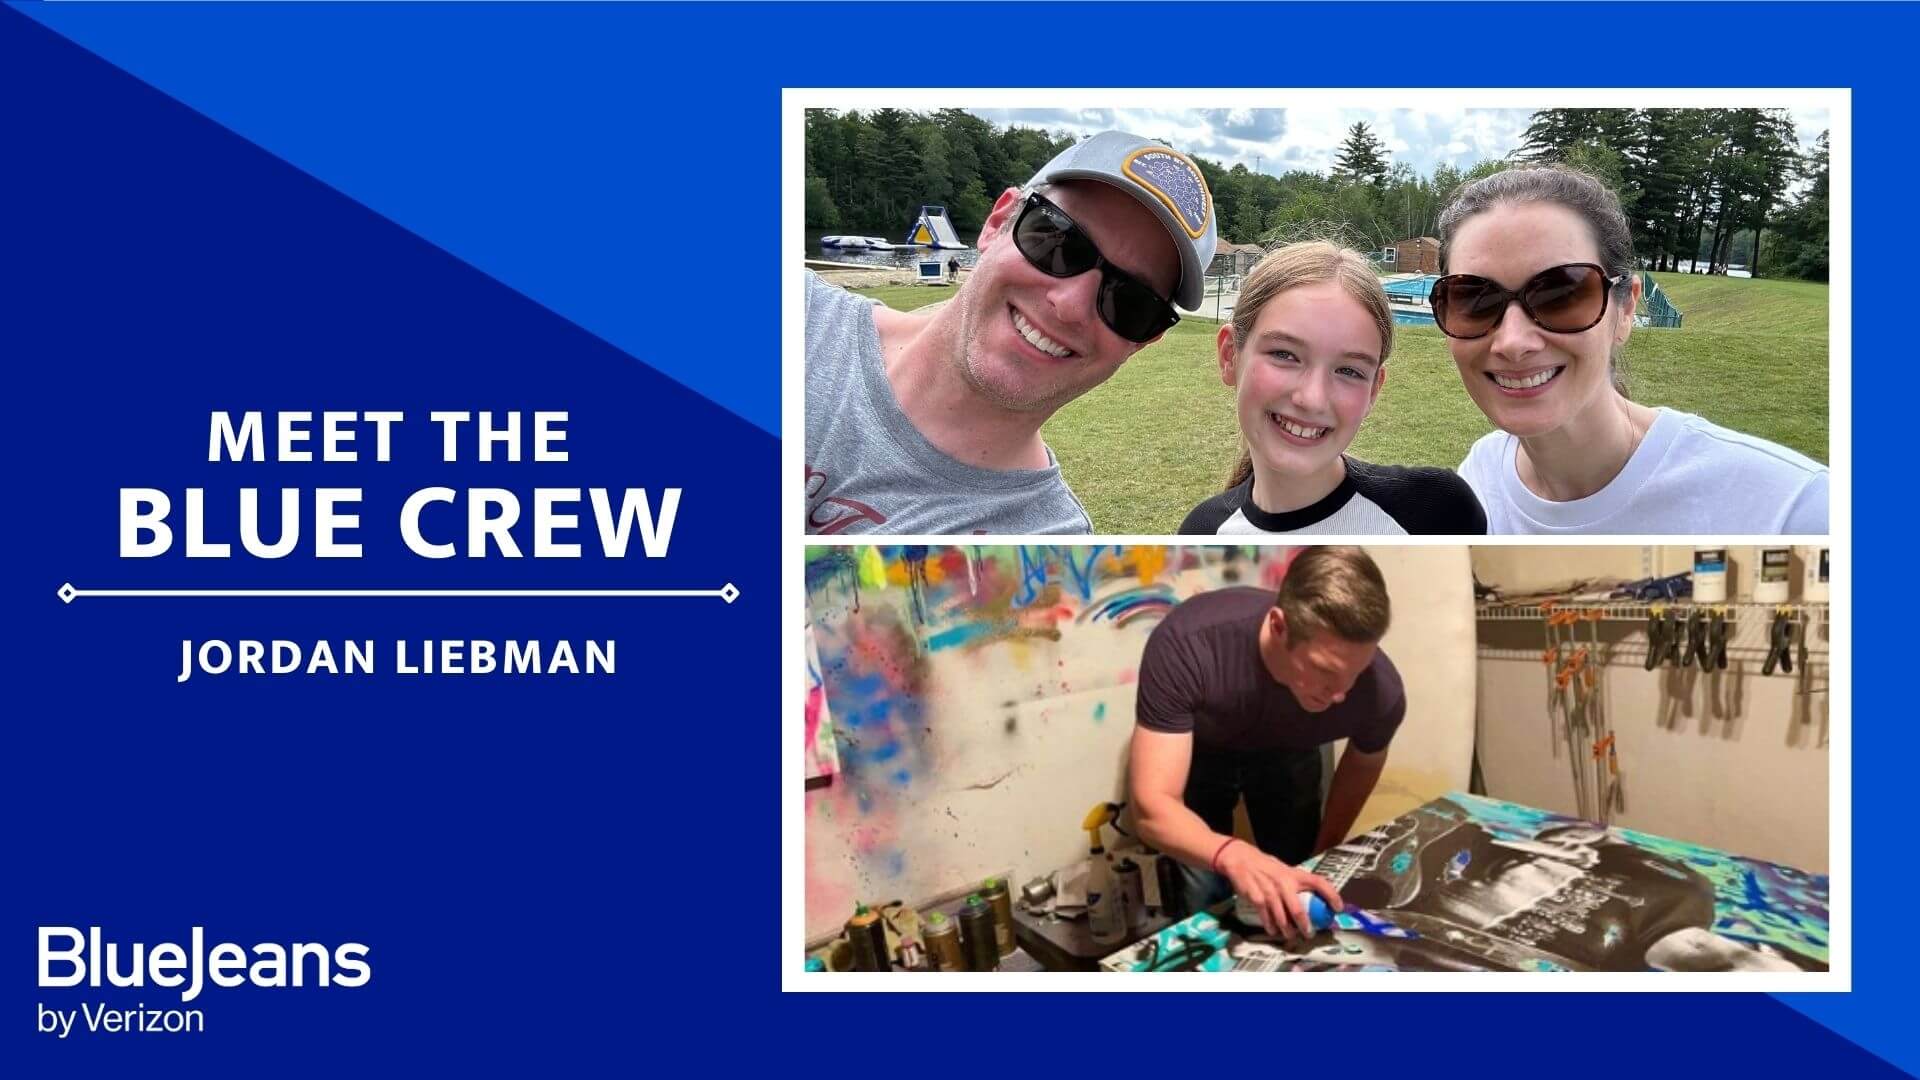 Blue Crew Jordan Liebman 